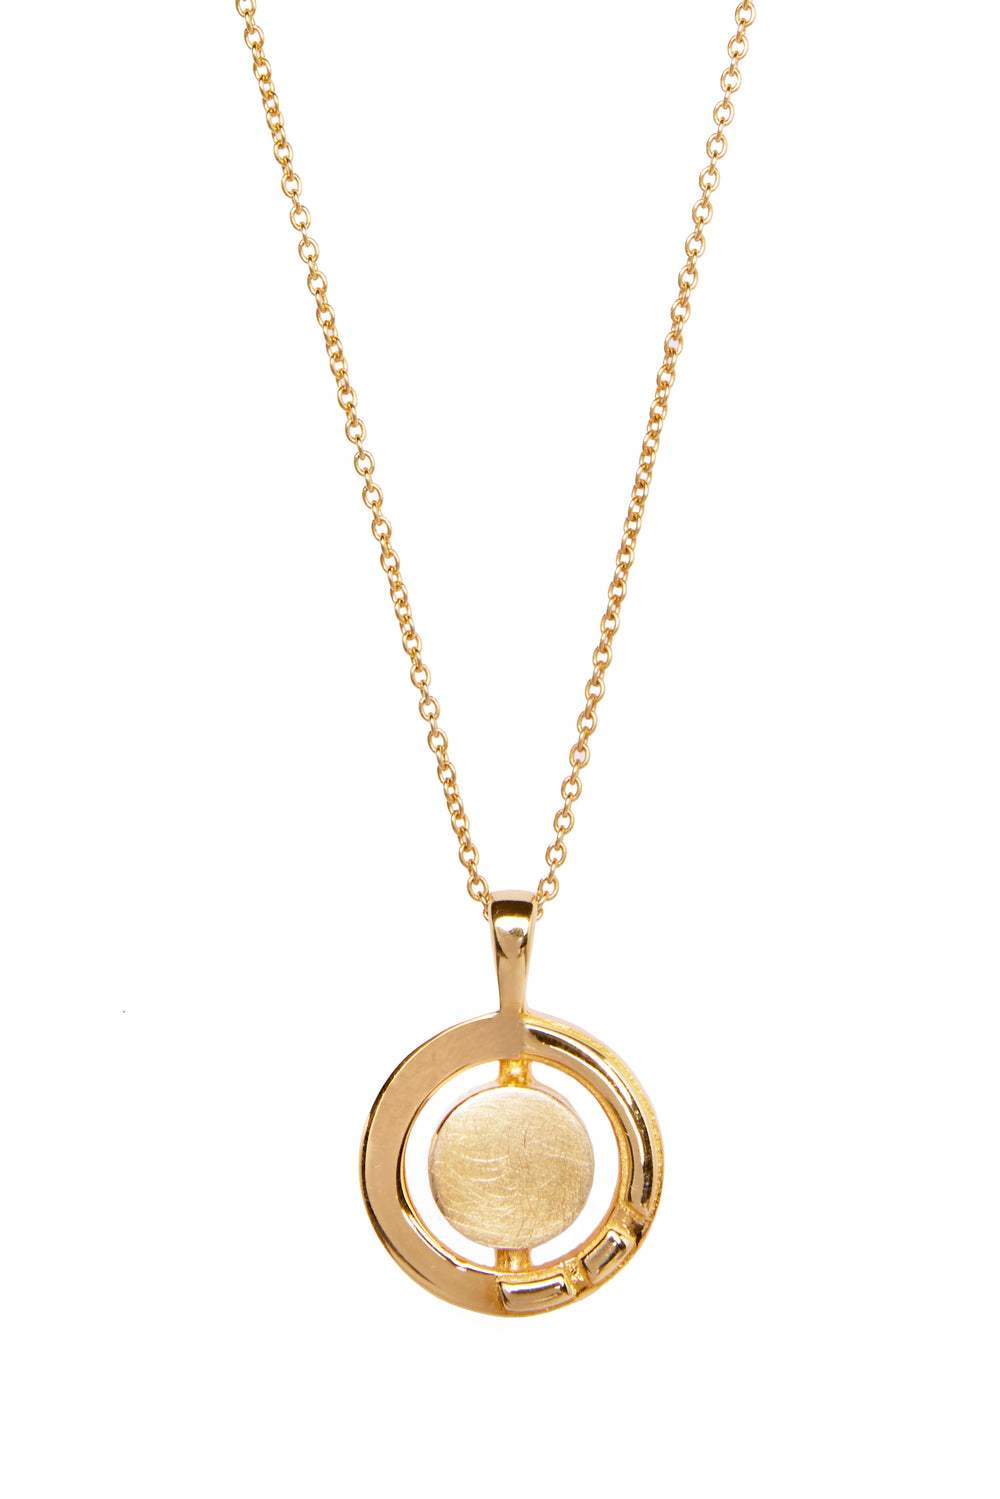 Uru Pendant necklace in gold vermeil- Gallardo & Blaine Designs